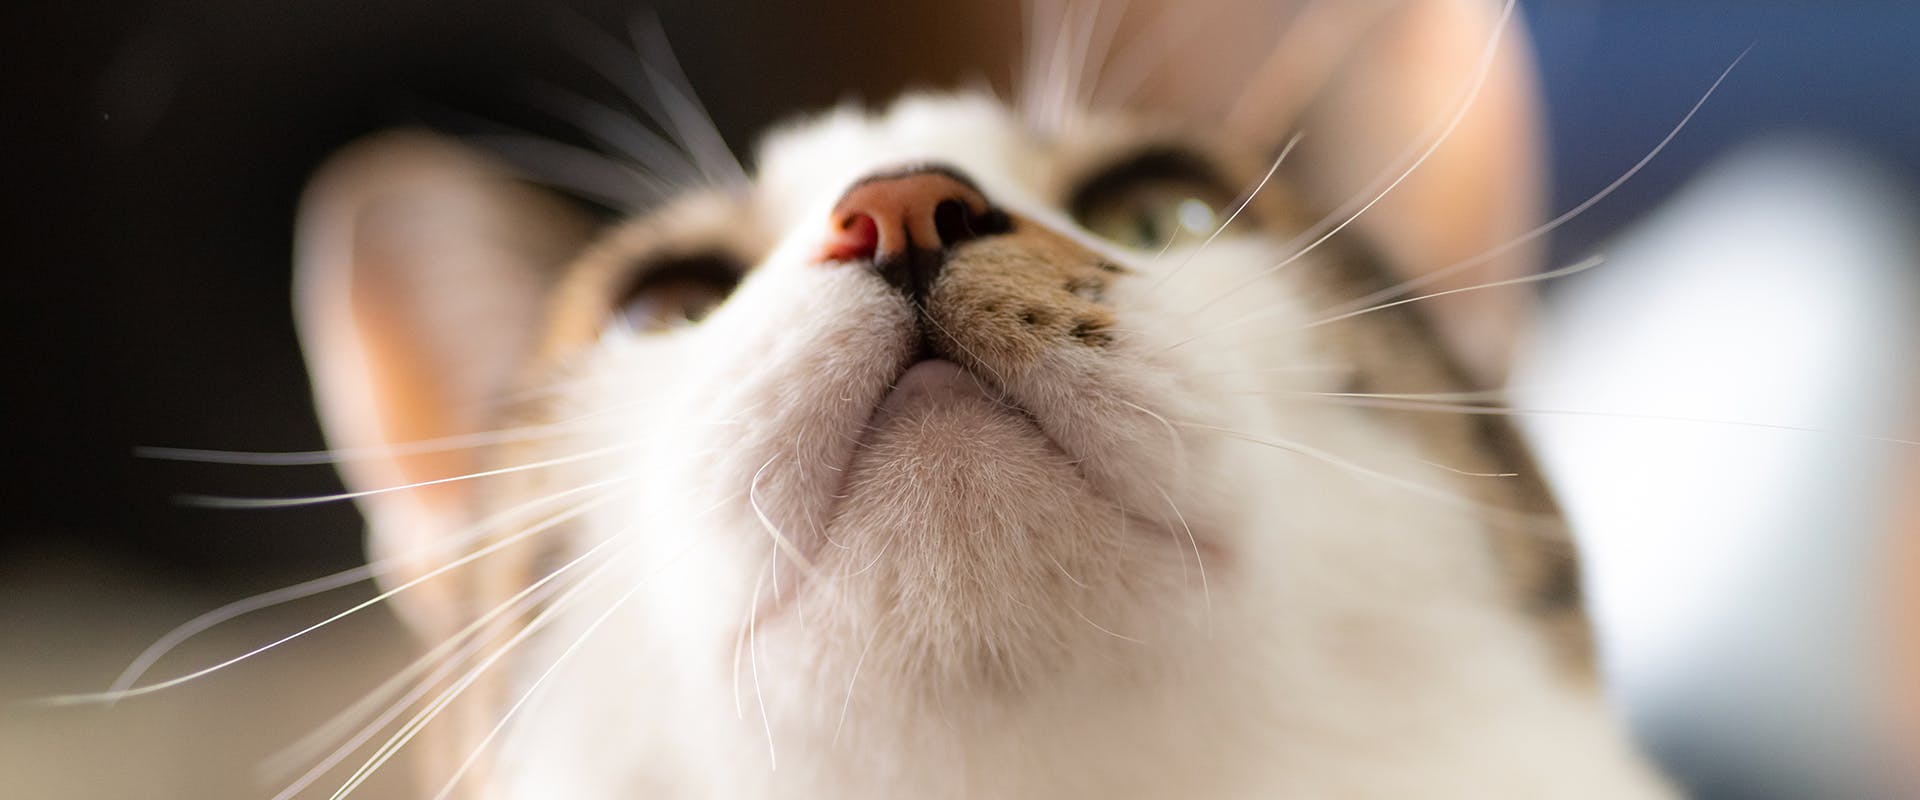 A close up of a cat's nose